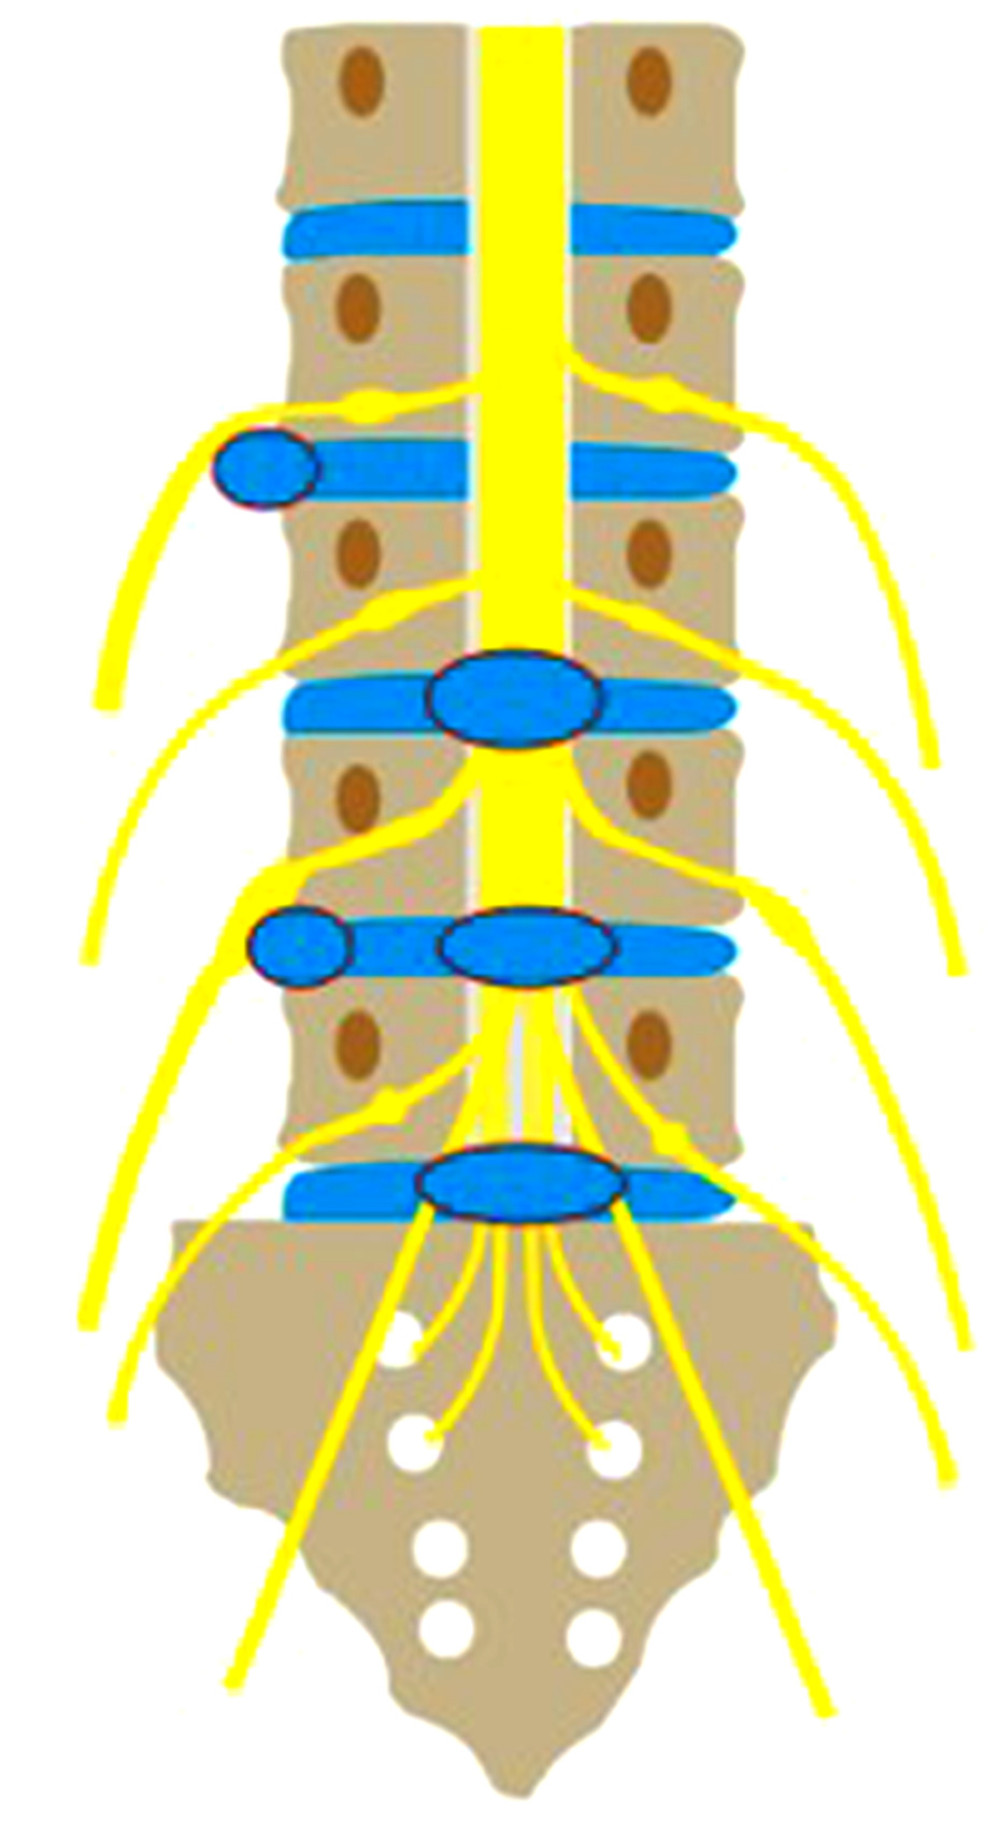 The relationship between the lumbosacral nerve and intervertebral disc herniation.